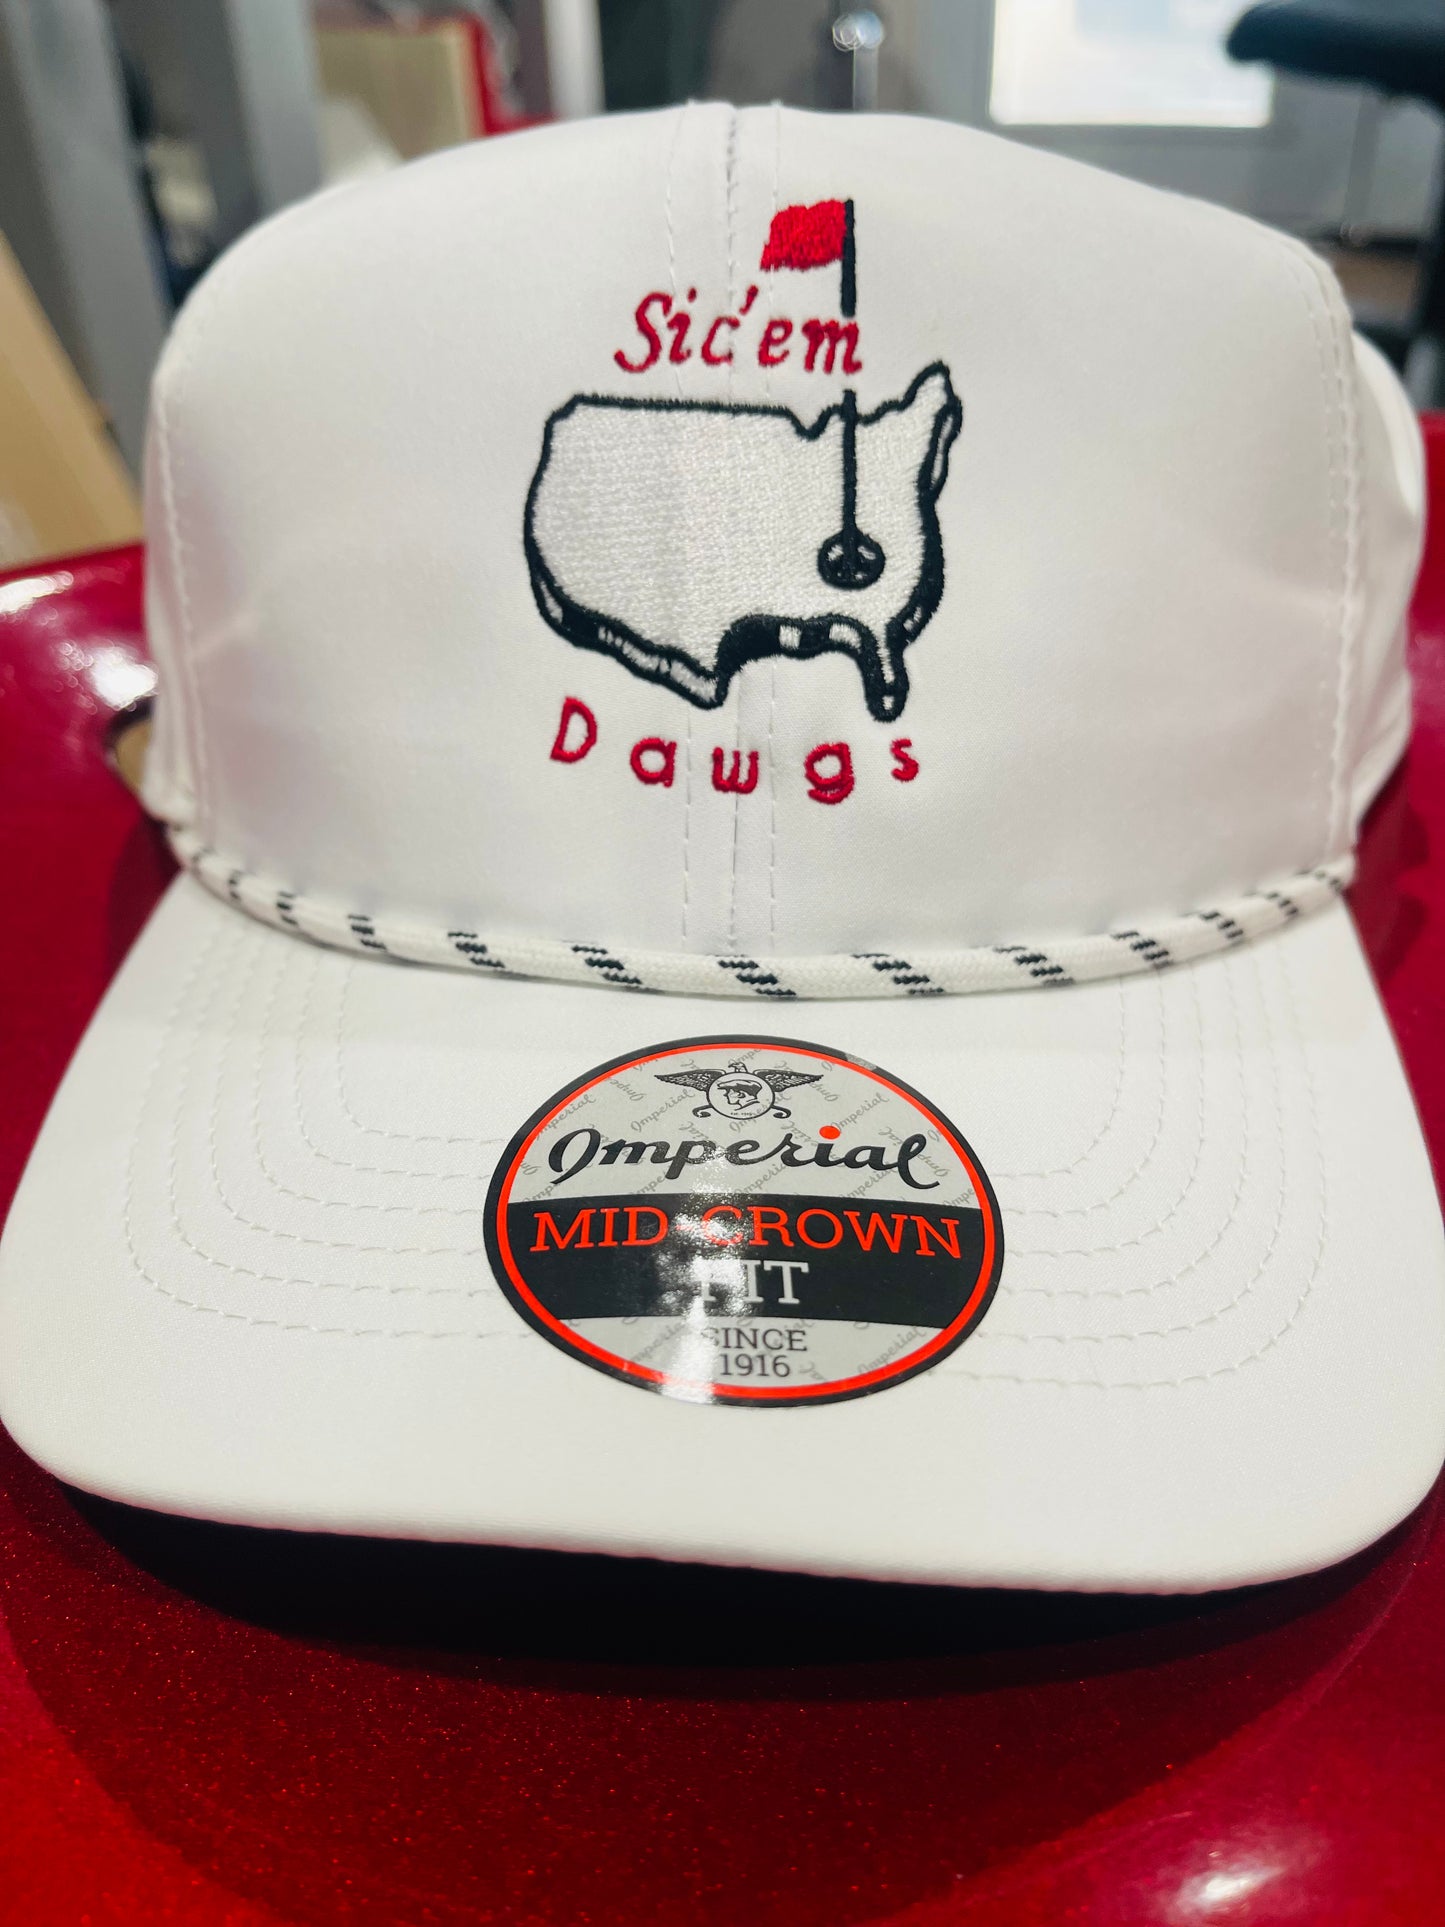 Sic’em Dawgs Imperial rope golf masters hat